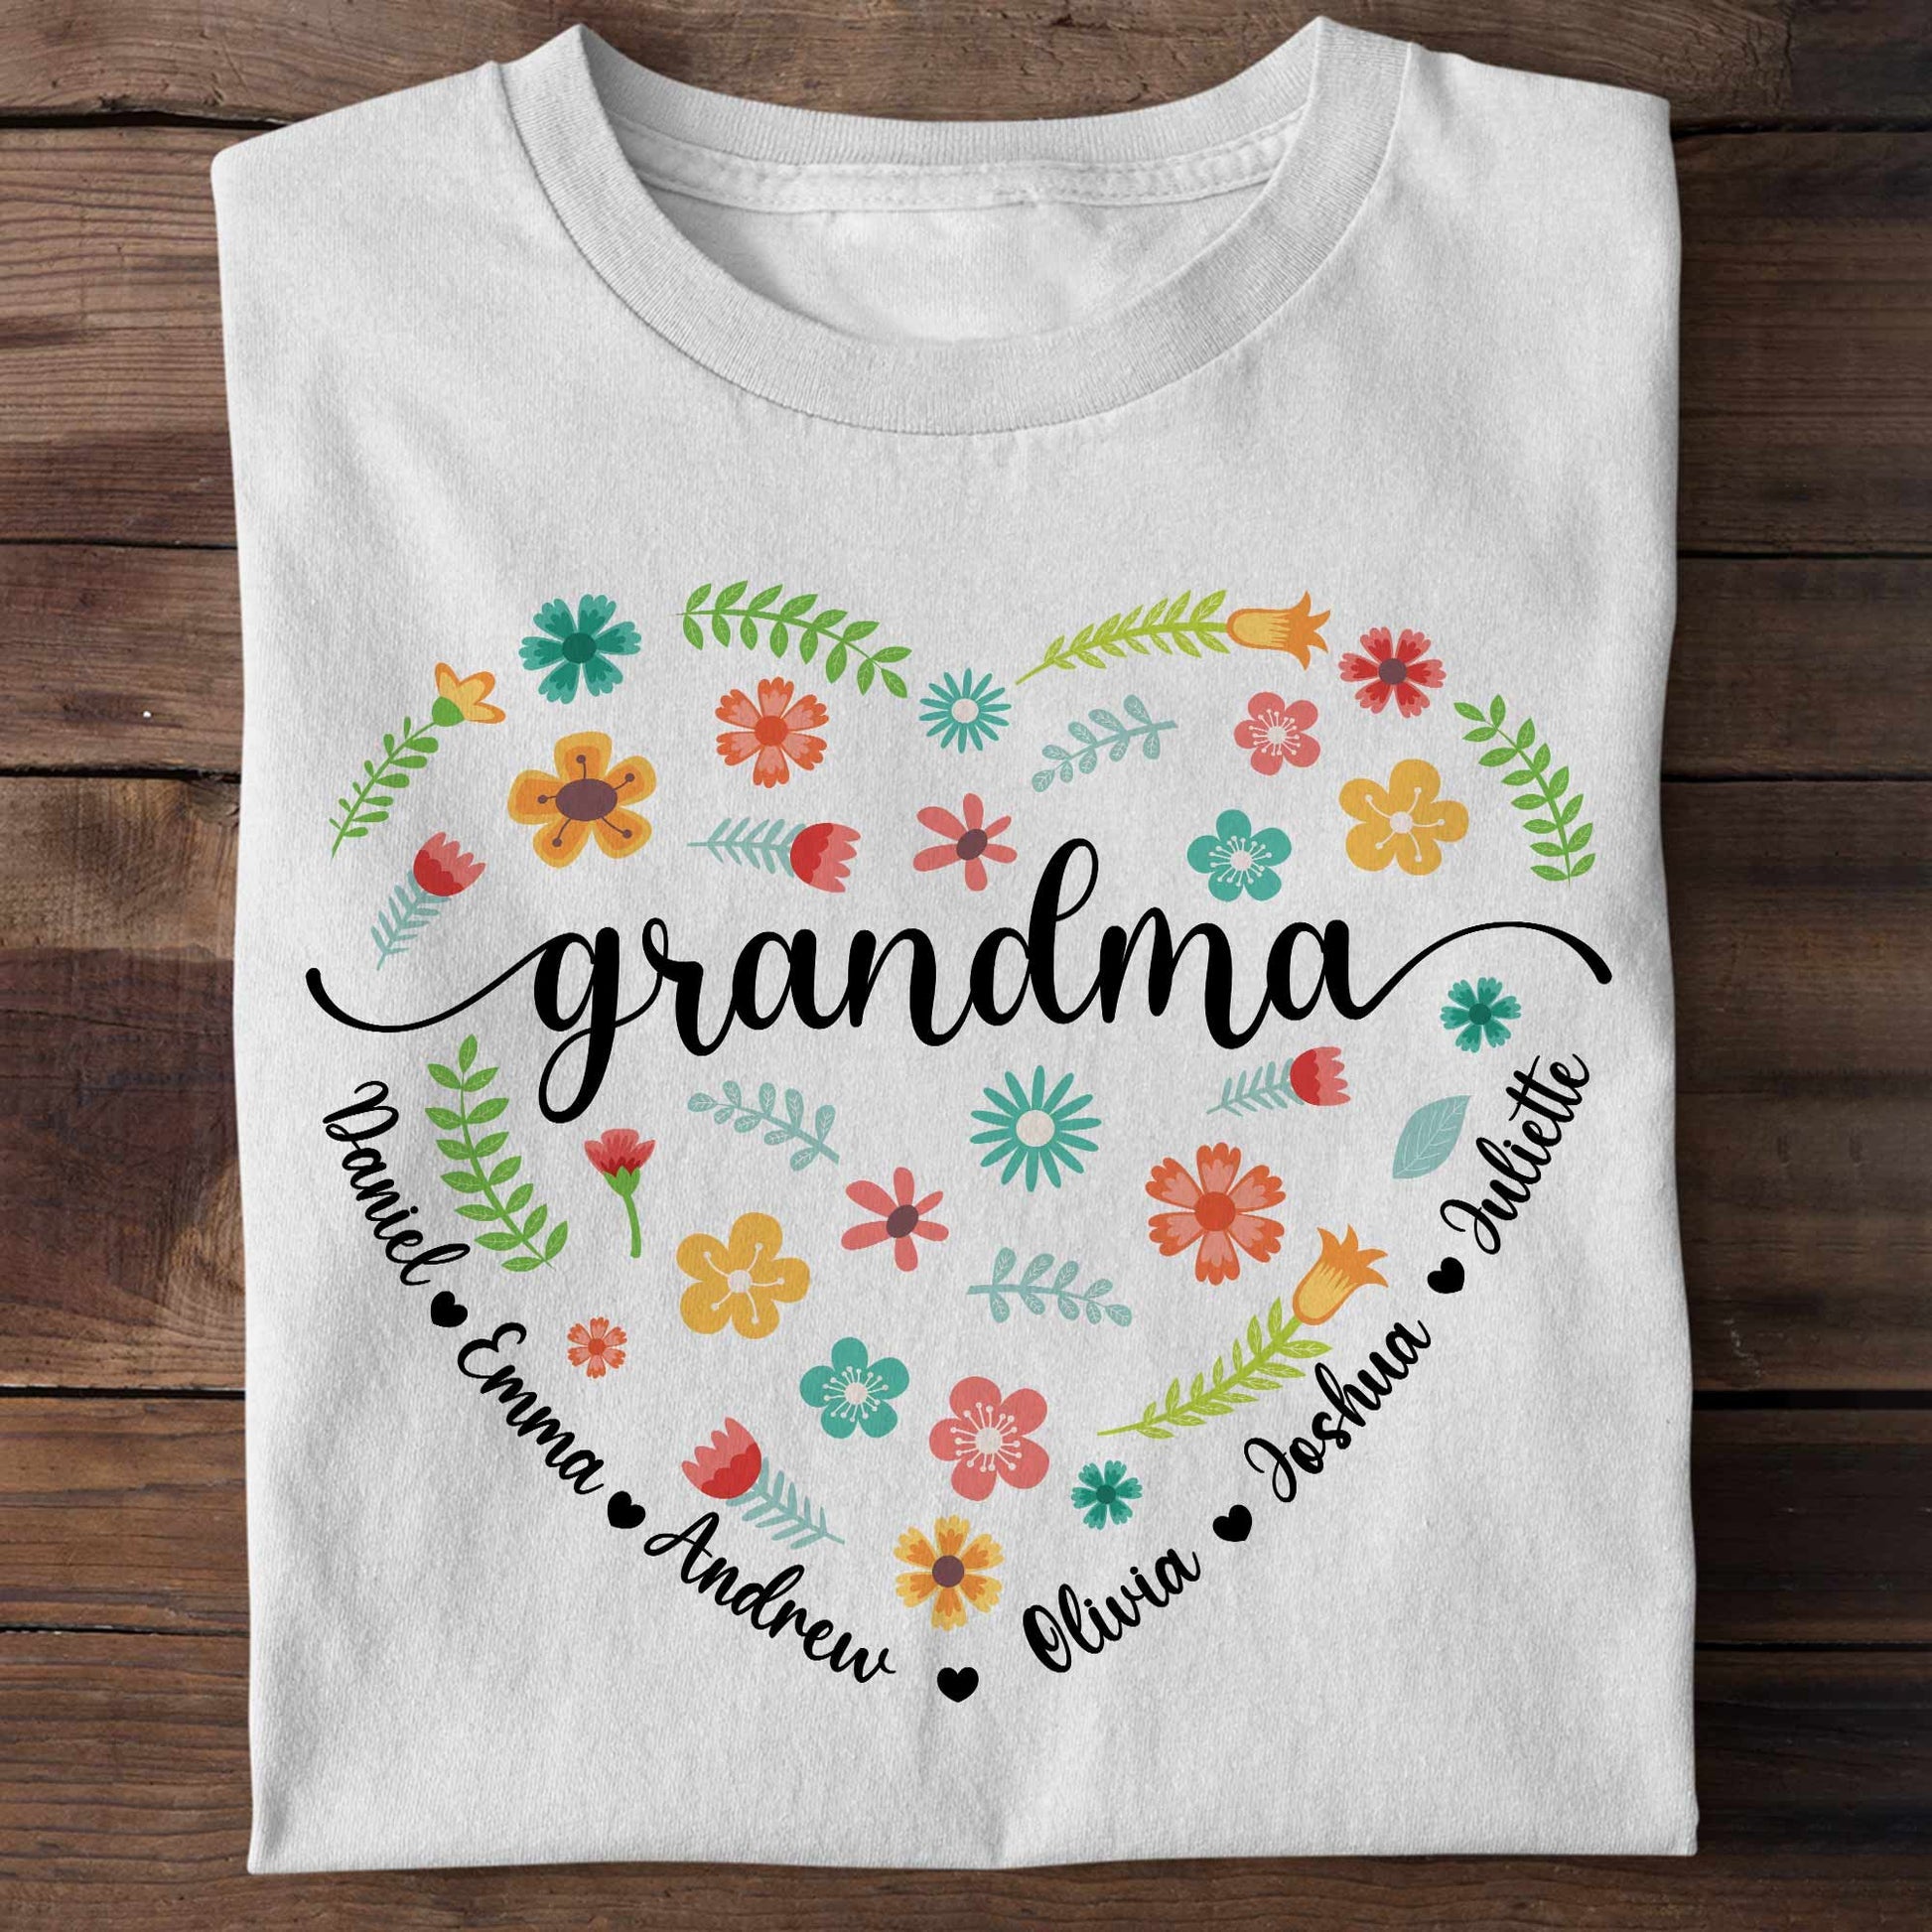 I Love Grandma's Garden - Gift For Grandmother - Personalized Unisex Shirt